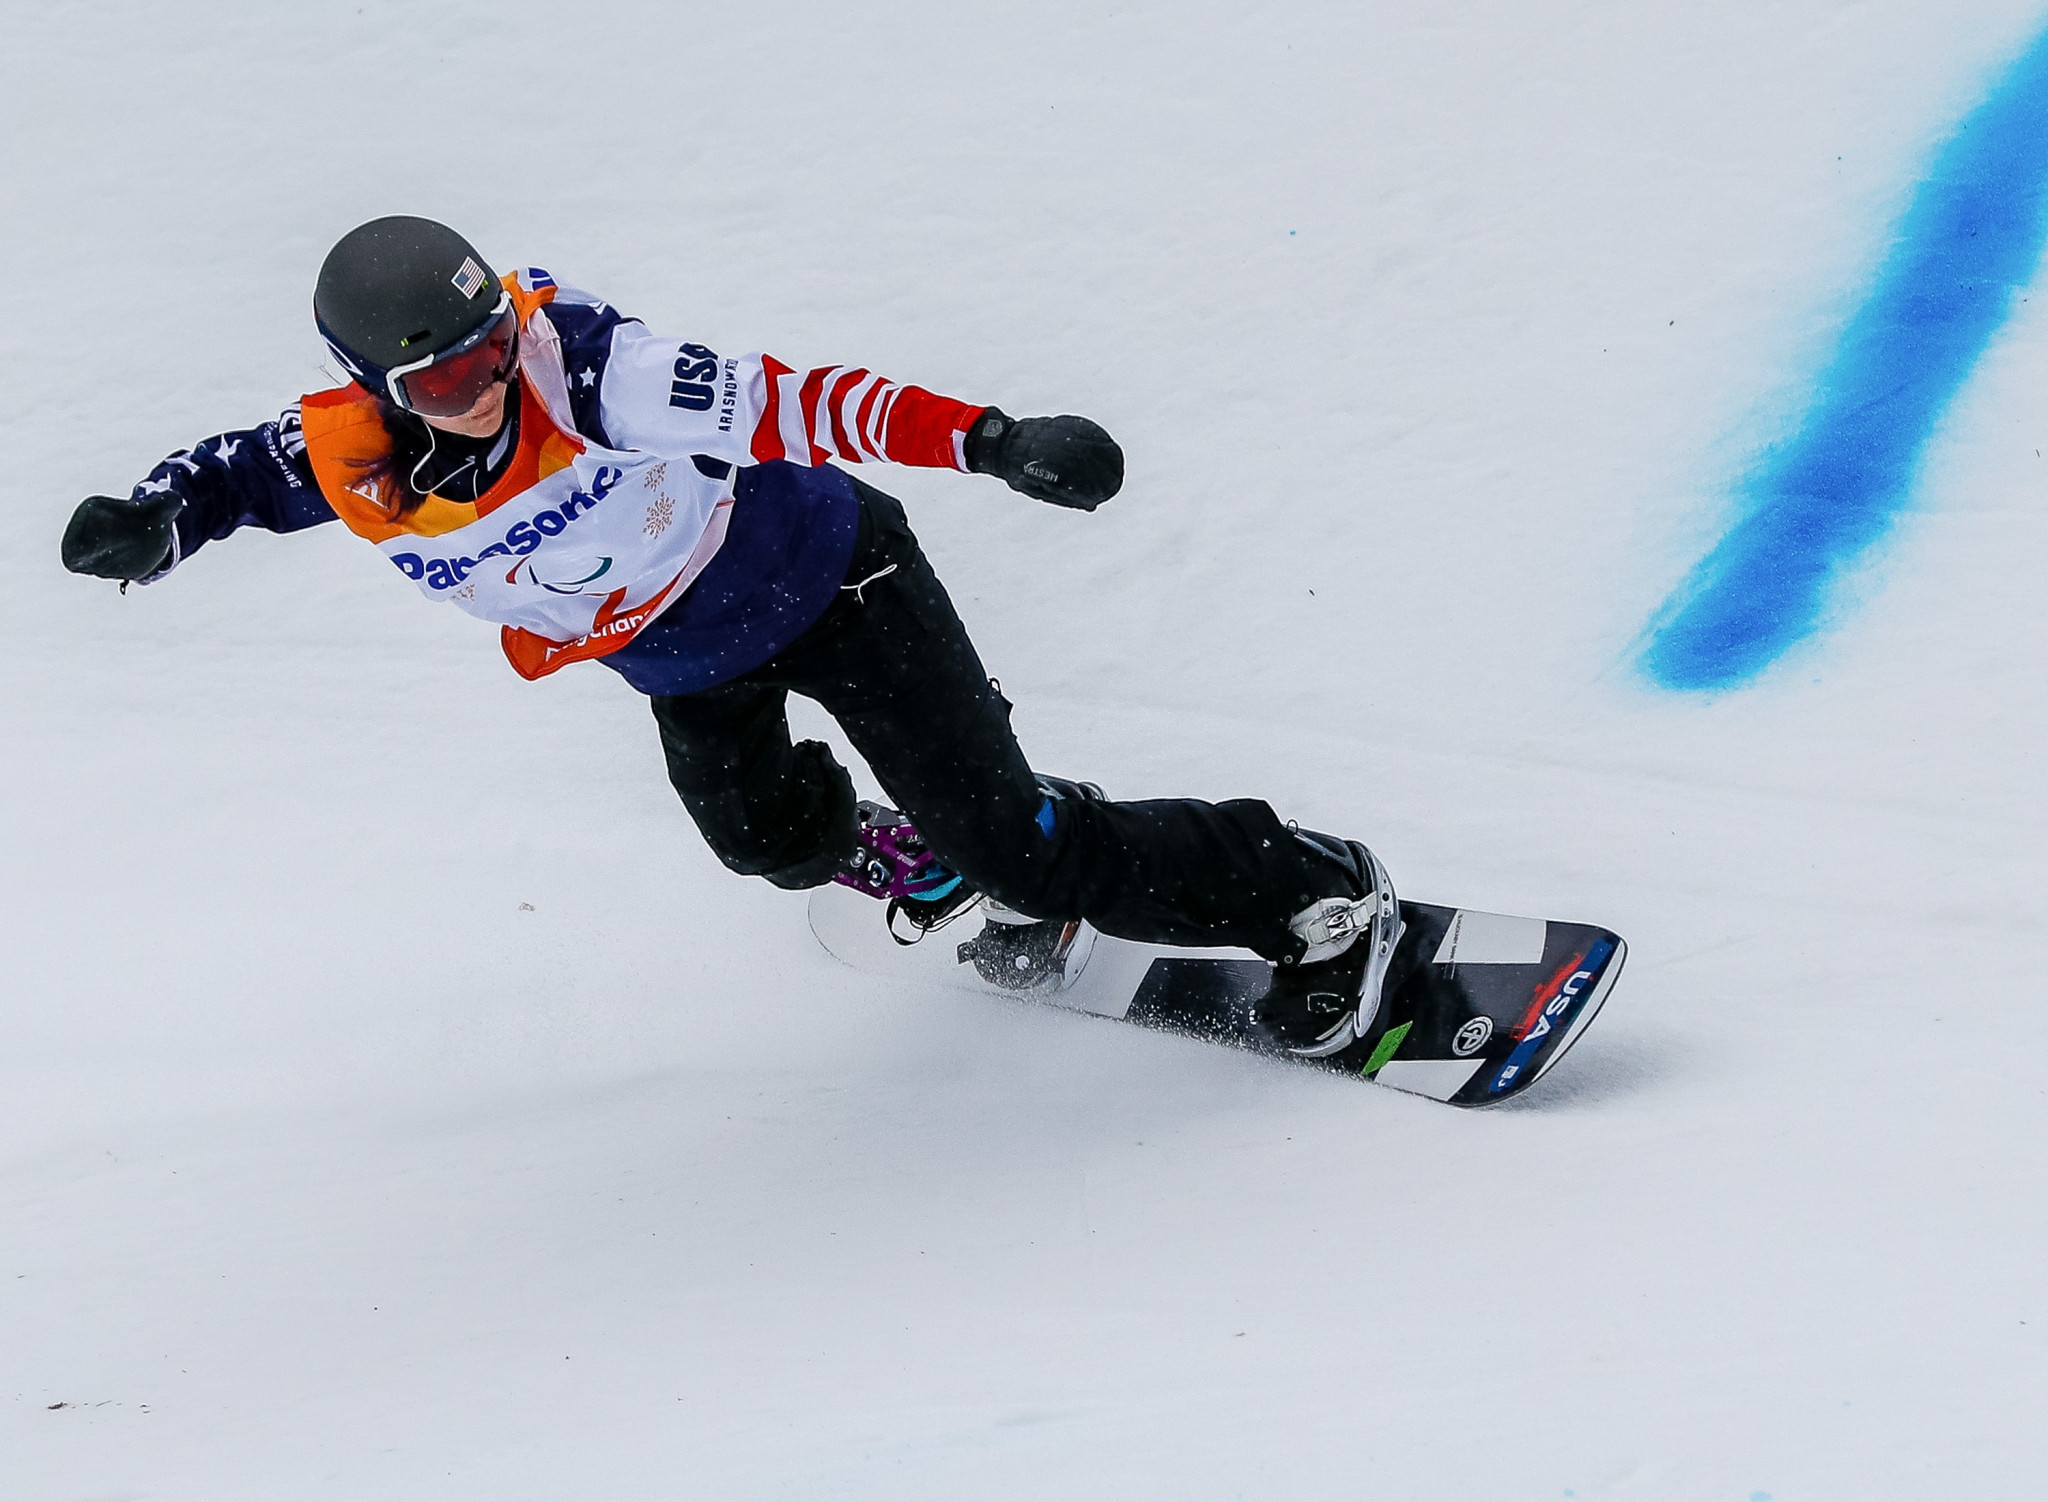 Huckaby and Mentel-Spee seal domination of snowboard events at Pyeongchang 2018 